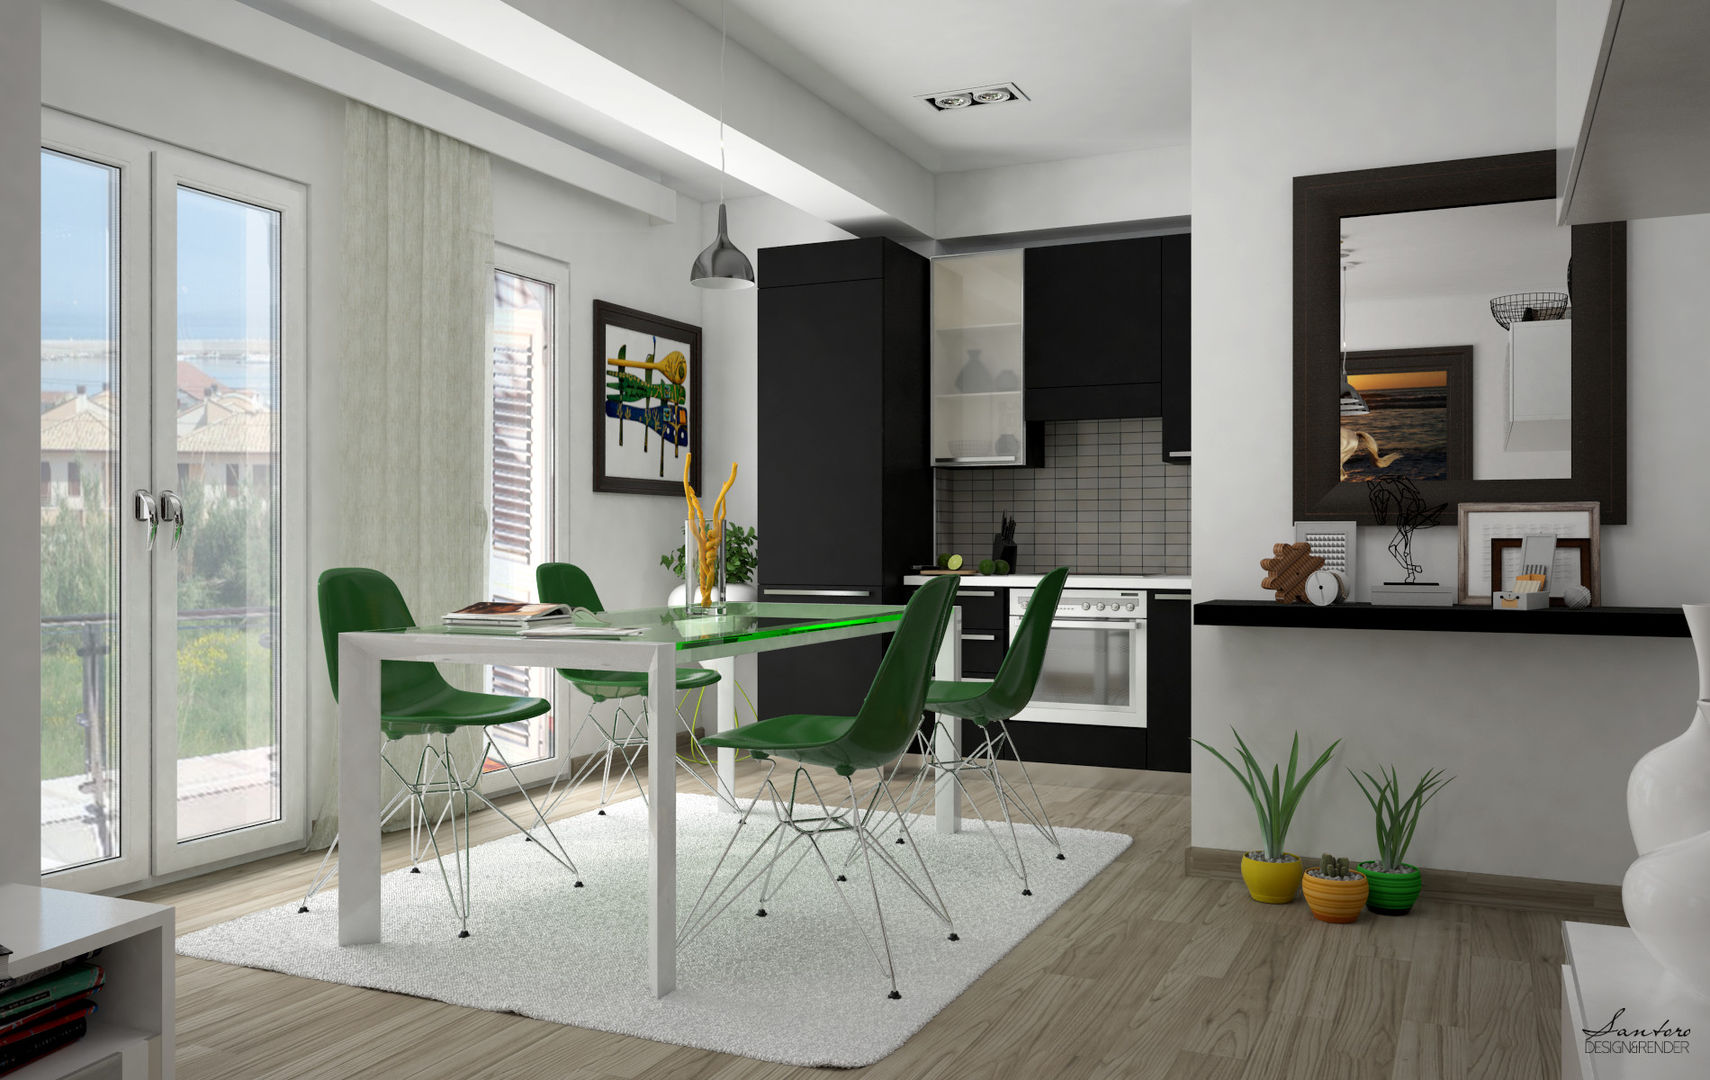 Design & Render livingroom – arredamento S.Agata Militello (ME) , Santoro Design Render Santoro Design Render Кухня